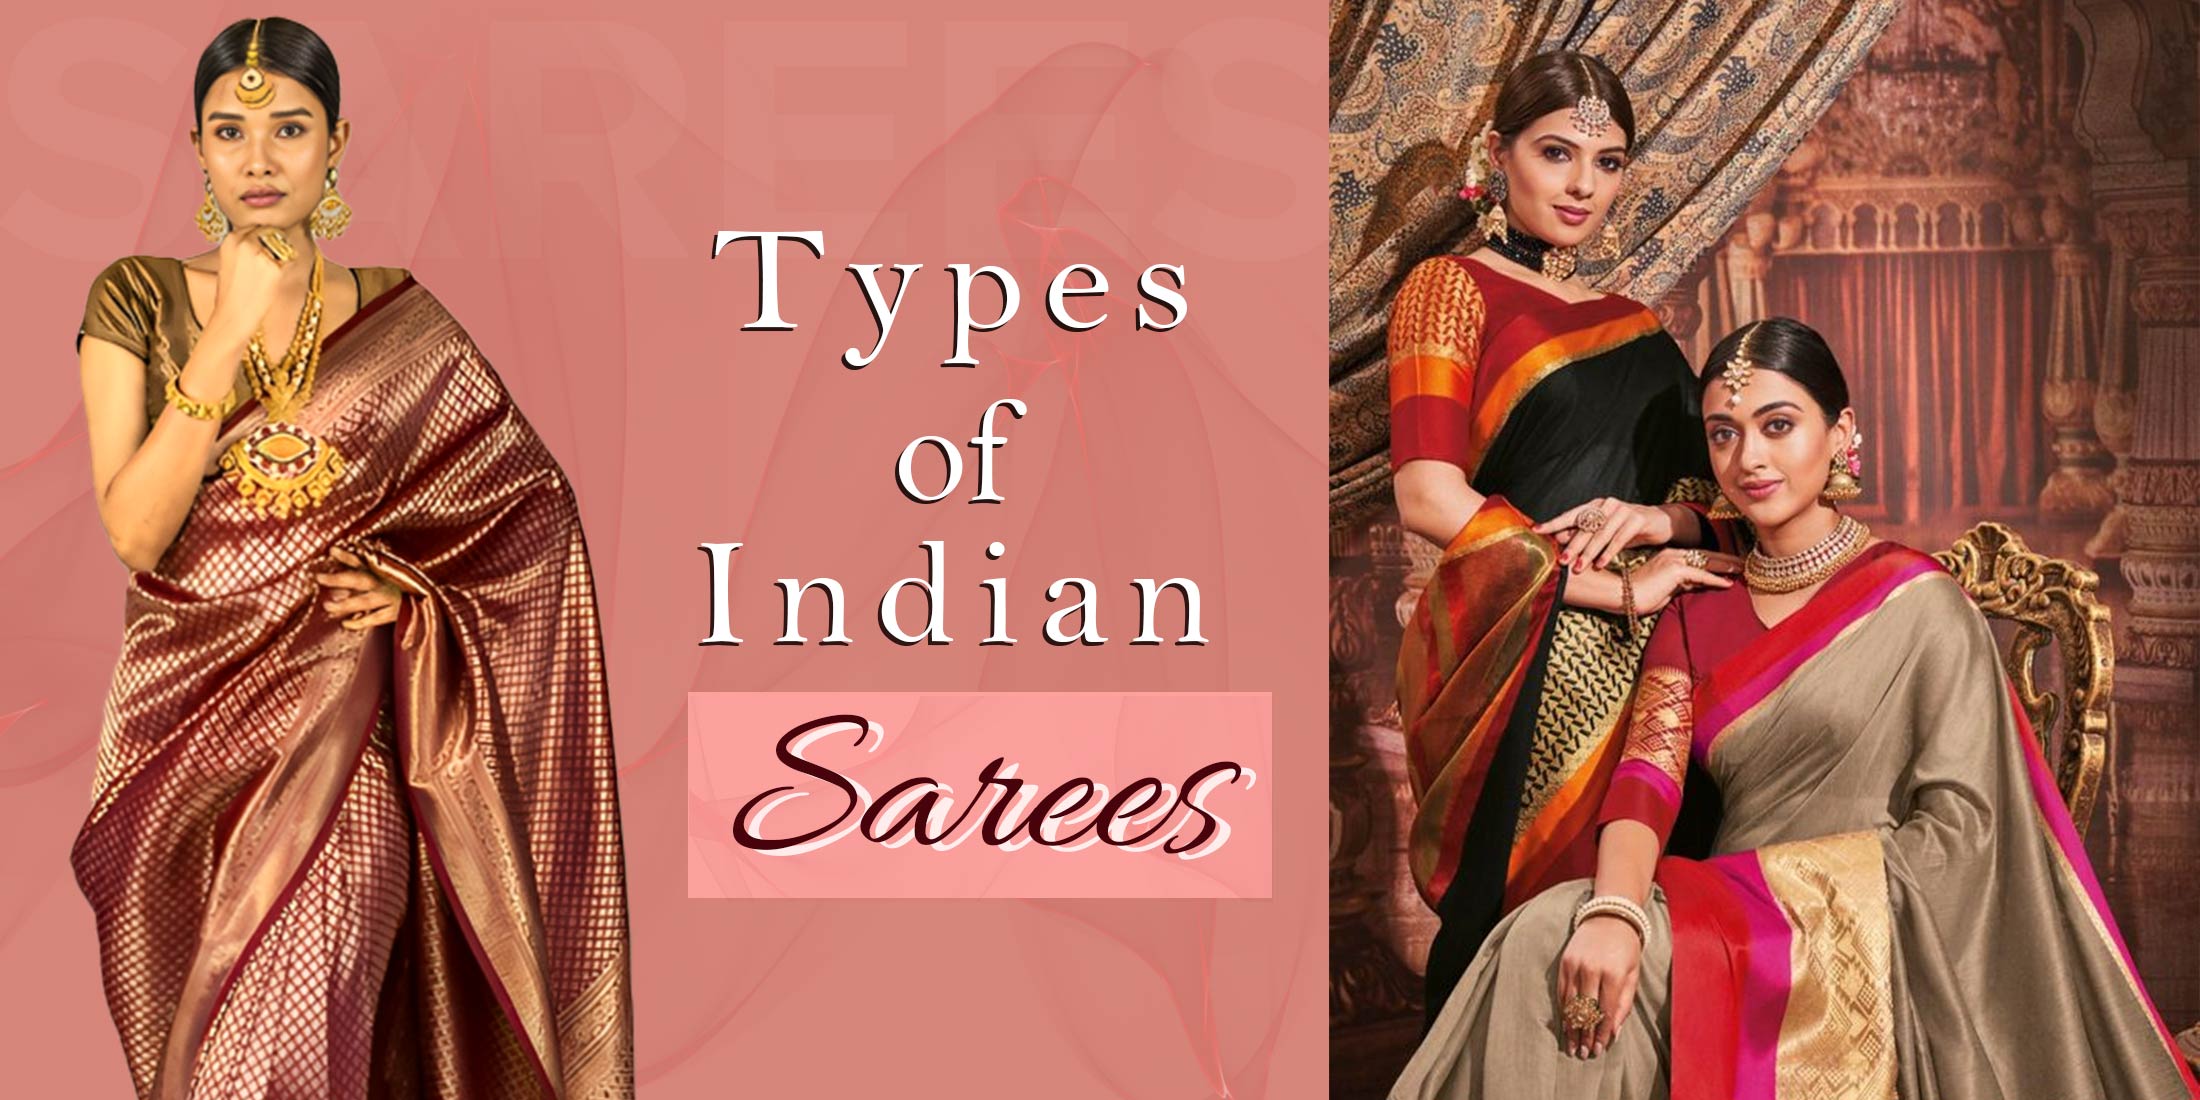 Indian women in saree.  Fancy sarees, Indian fashion, India beauty women